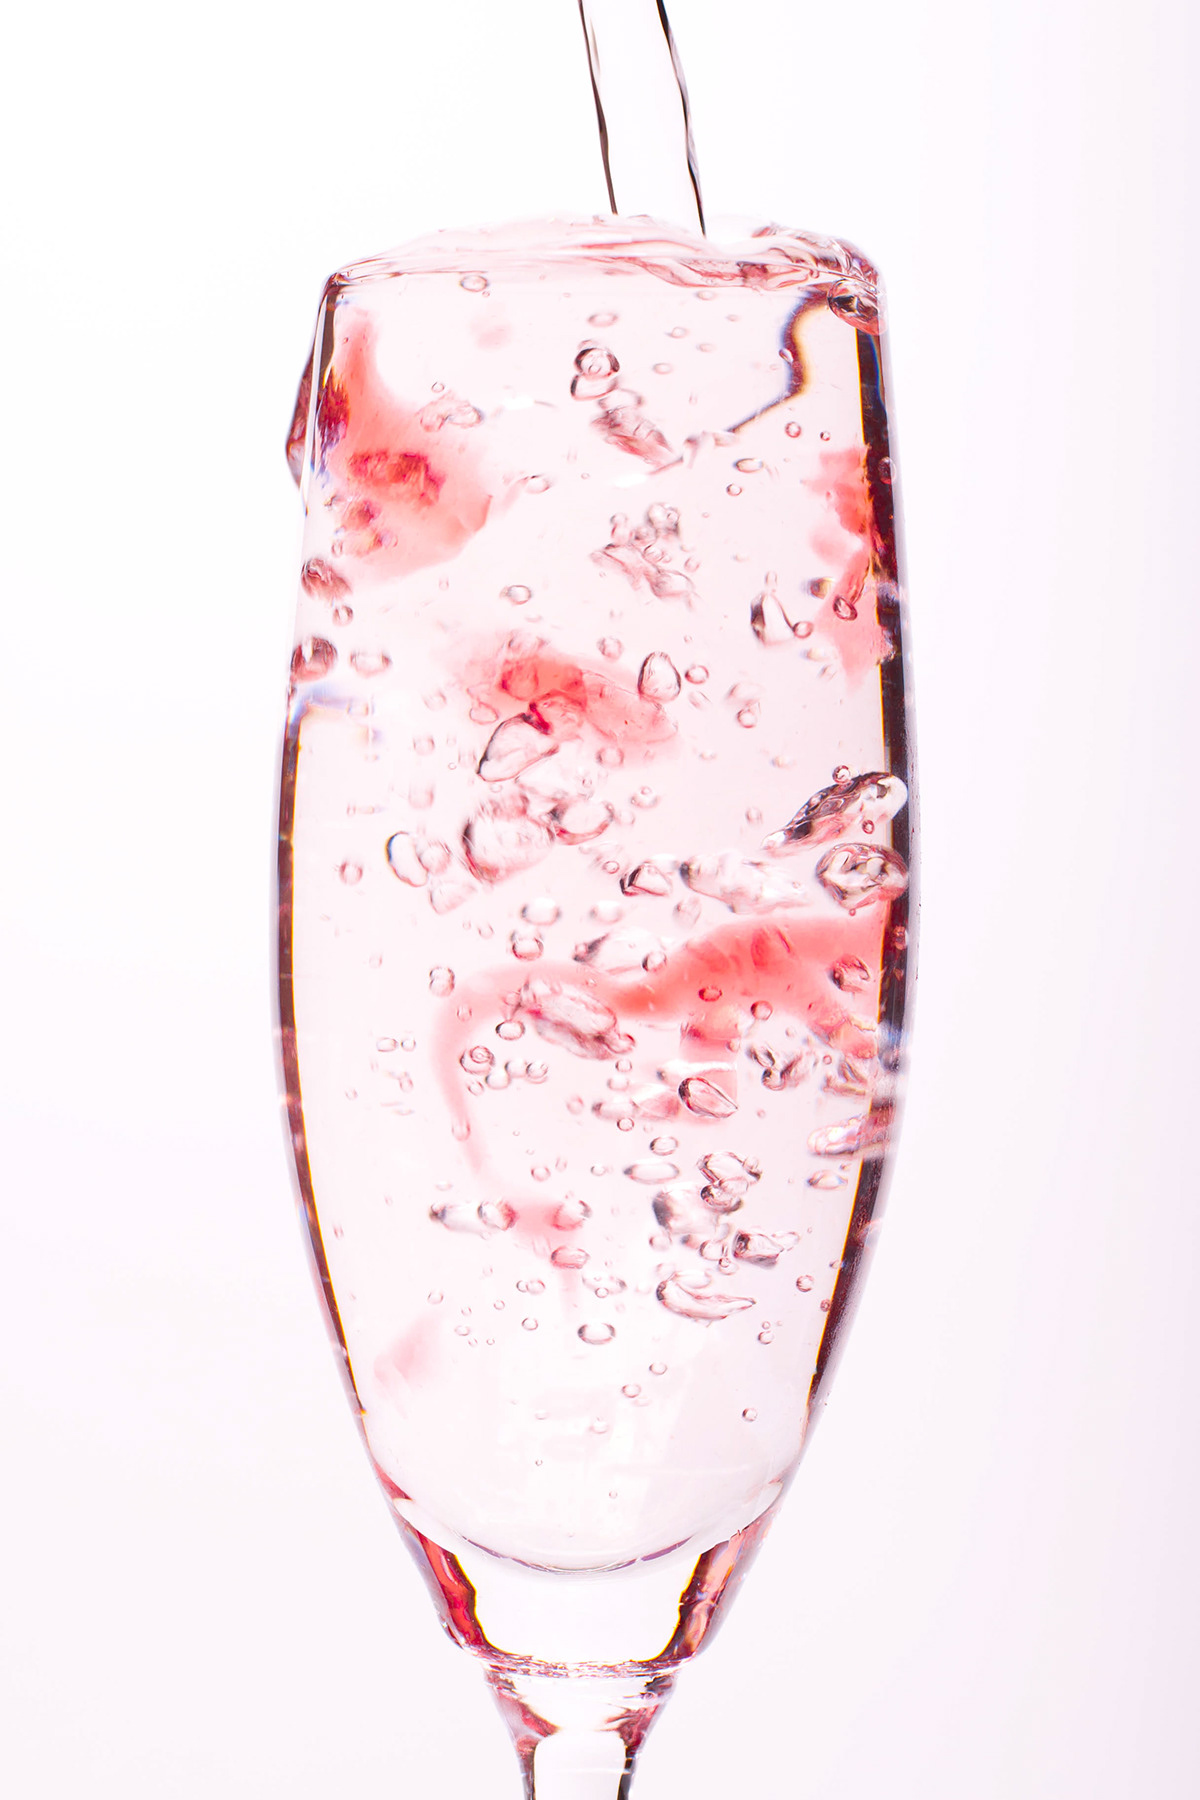 water red deform shapes dissolve bubbles splash fast shutter Form Liquid glass